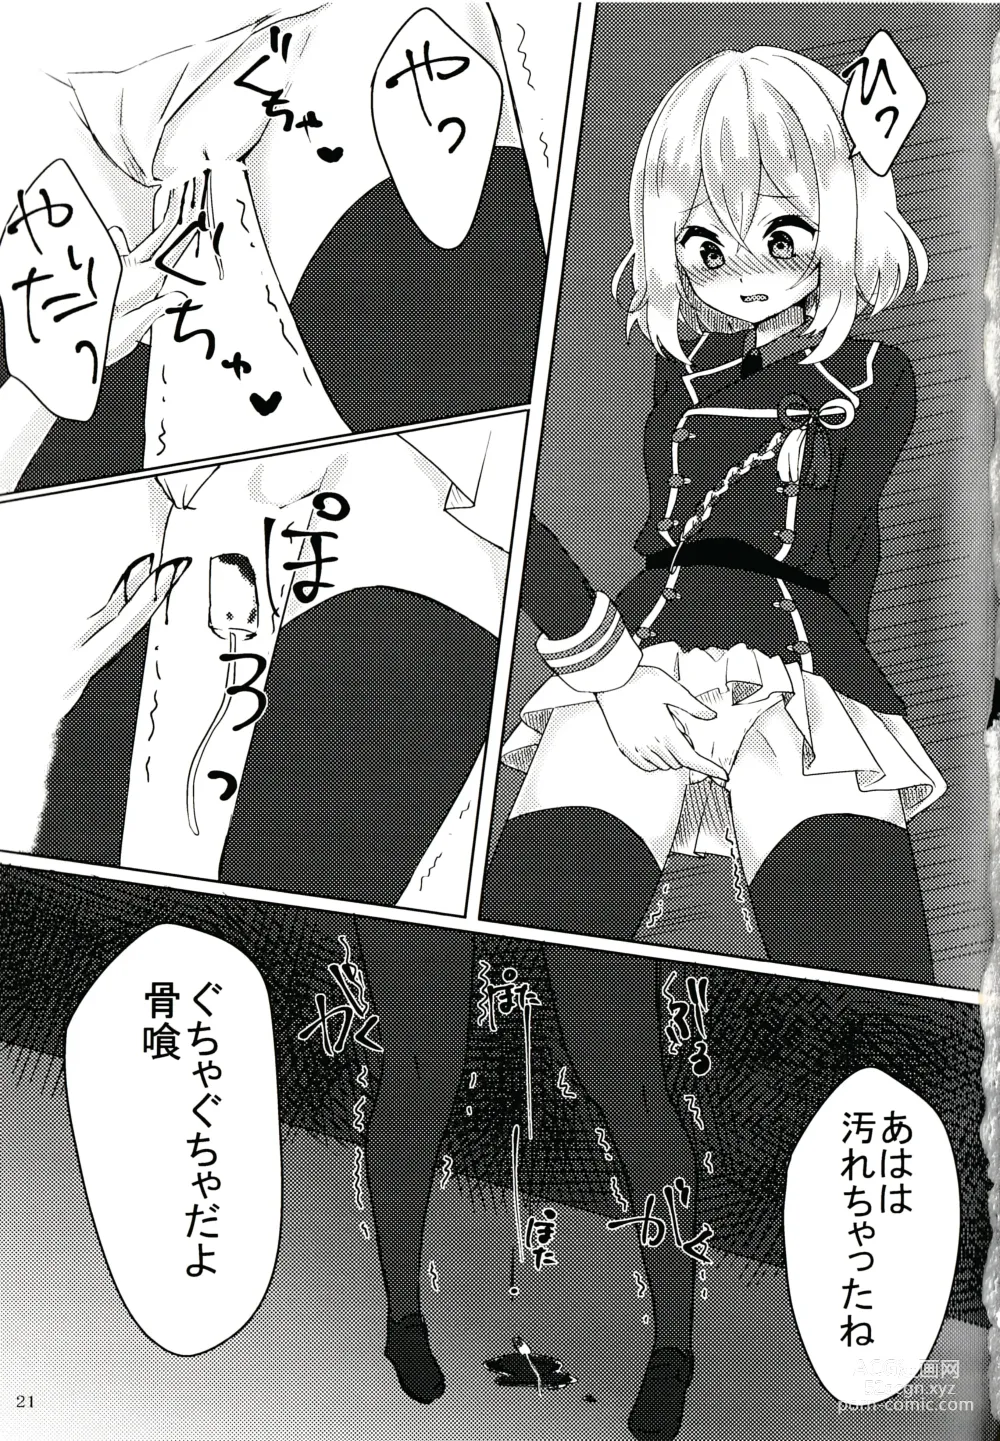 Page 20 of doujinshi Kimi ga Inai to